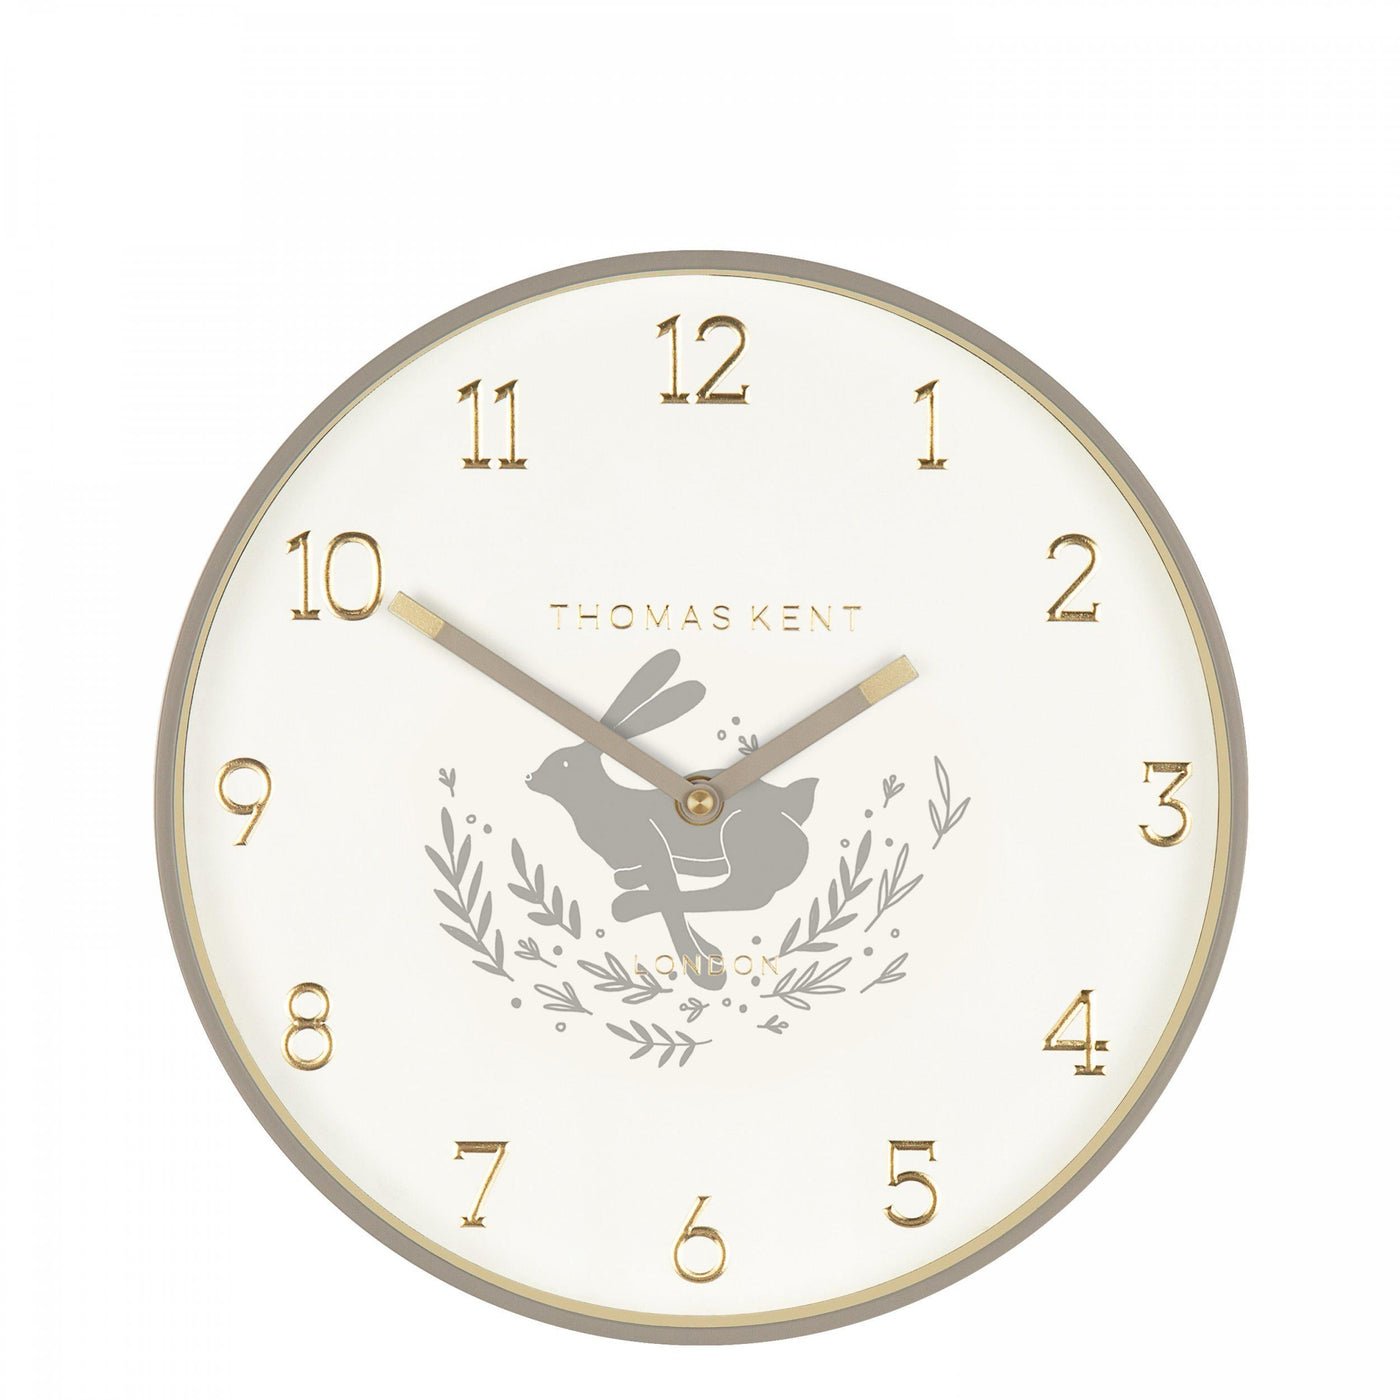 Thomas Kent London. Rare Hare Wall Clock - timeframedclocks